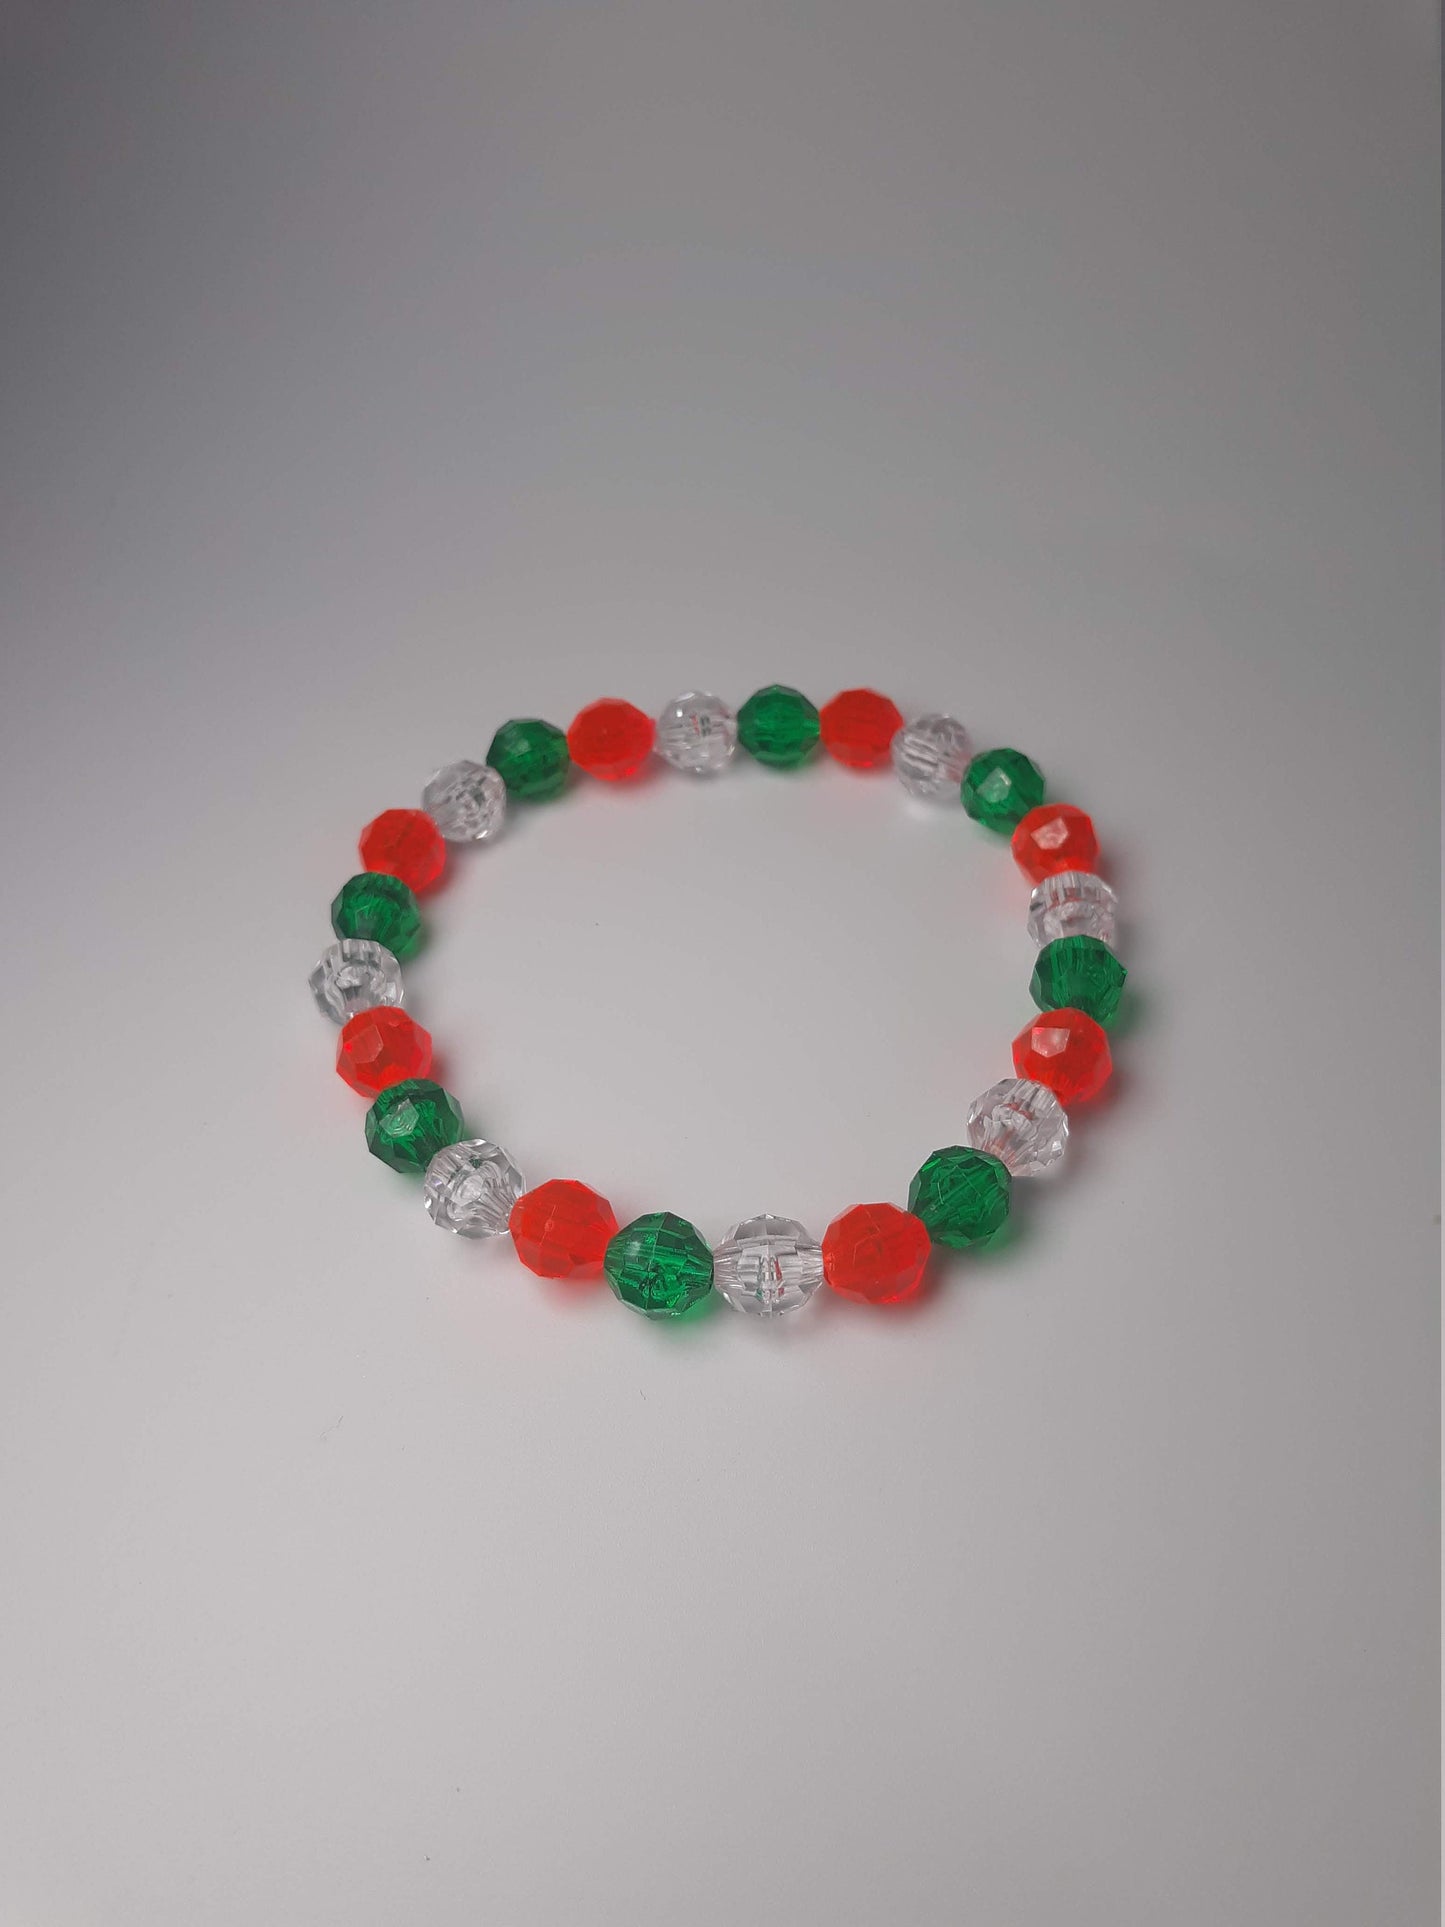 Chrimas/ Holiday themed bracelets